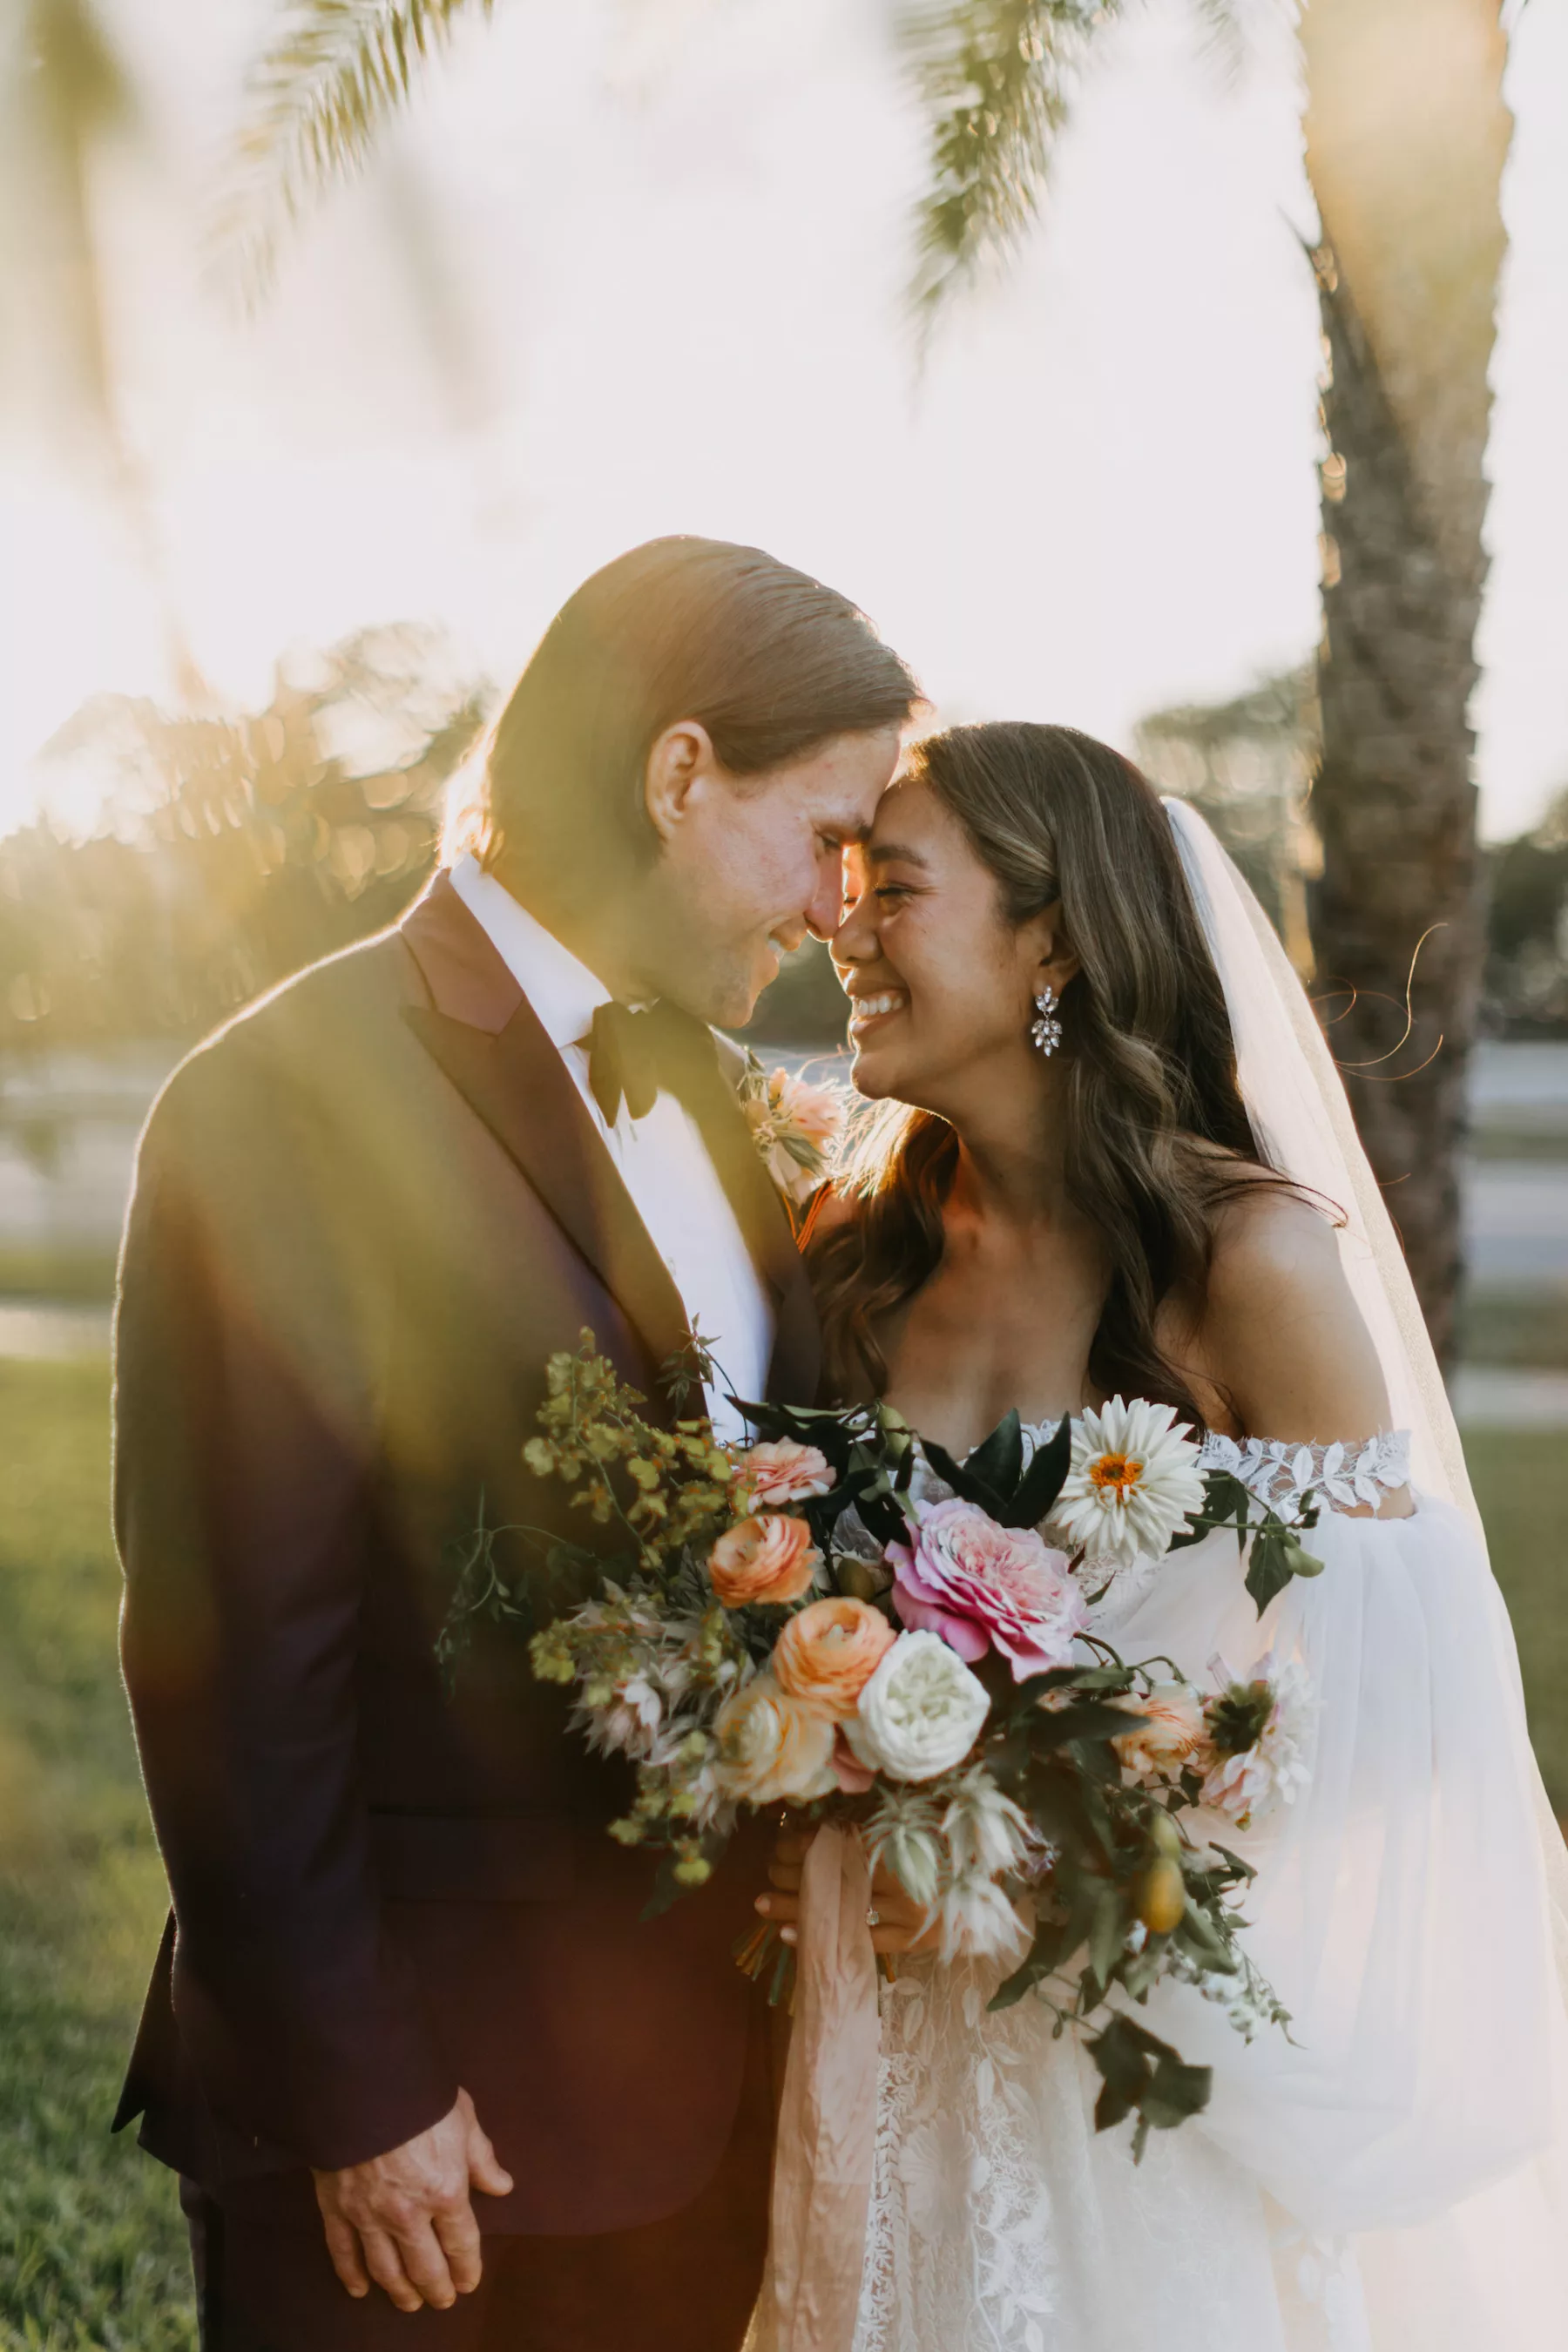 Romantic Sunset Bride and Groom Wedding Portrait | Tampa Bay Photographer Amber McWhorter Photography | Planner Coastal Coordinating | Hair and Makeup Artist Femme Akoi Beauty Studio